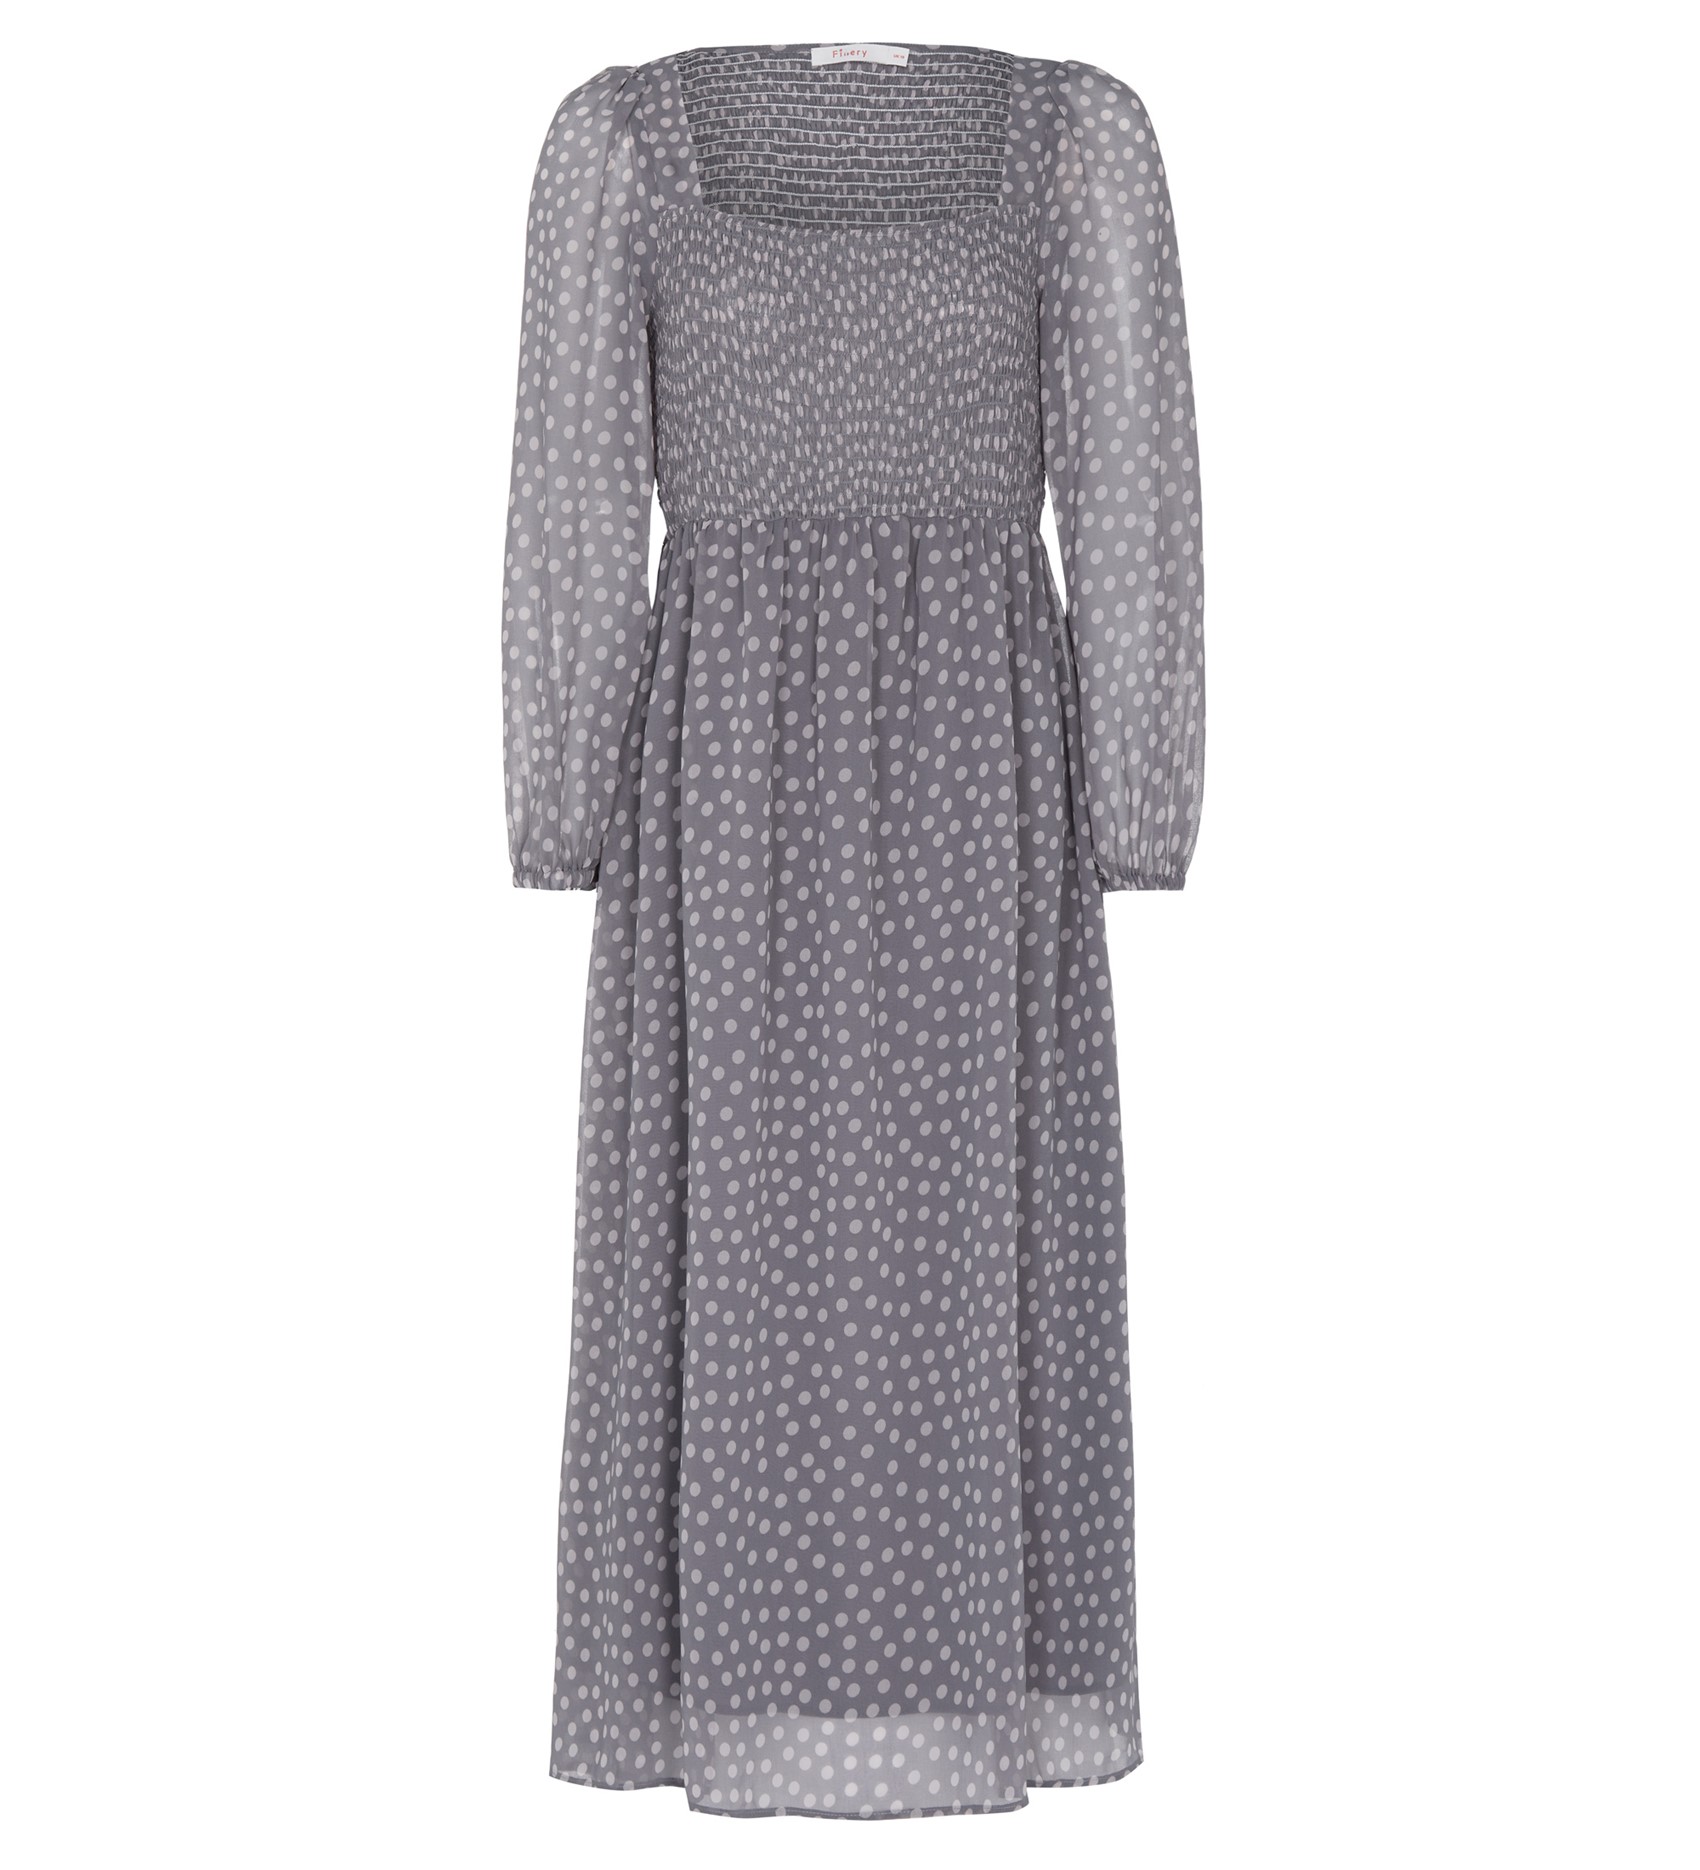 Midi Grey Spot Dress | Long Sleeves | Finery London